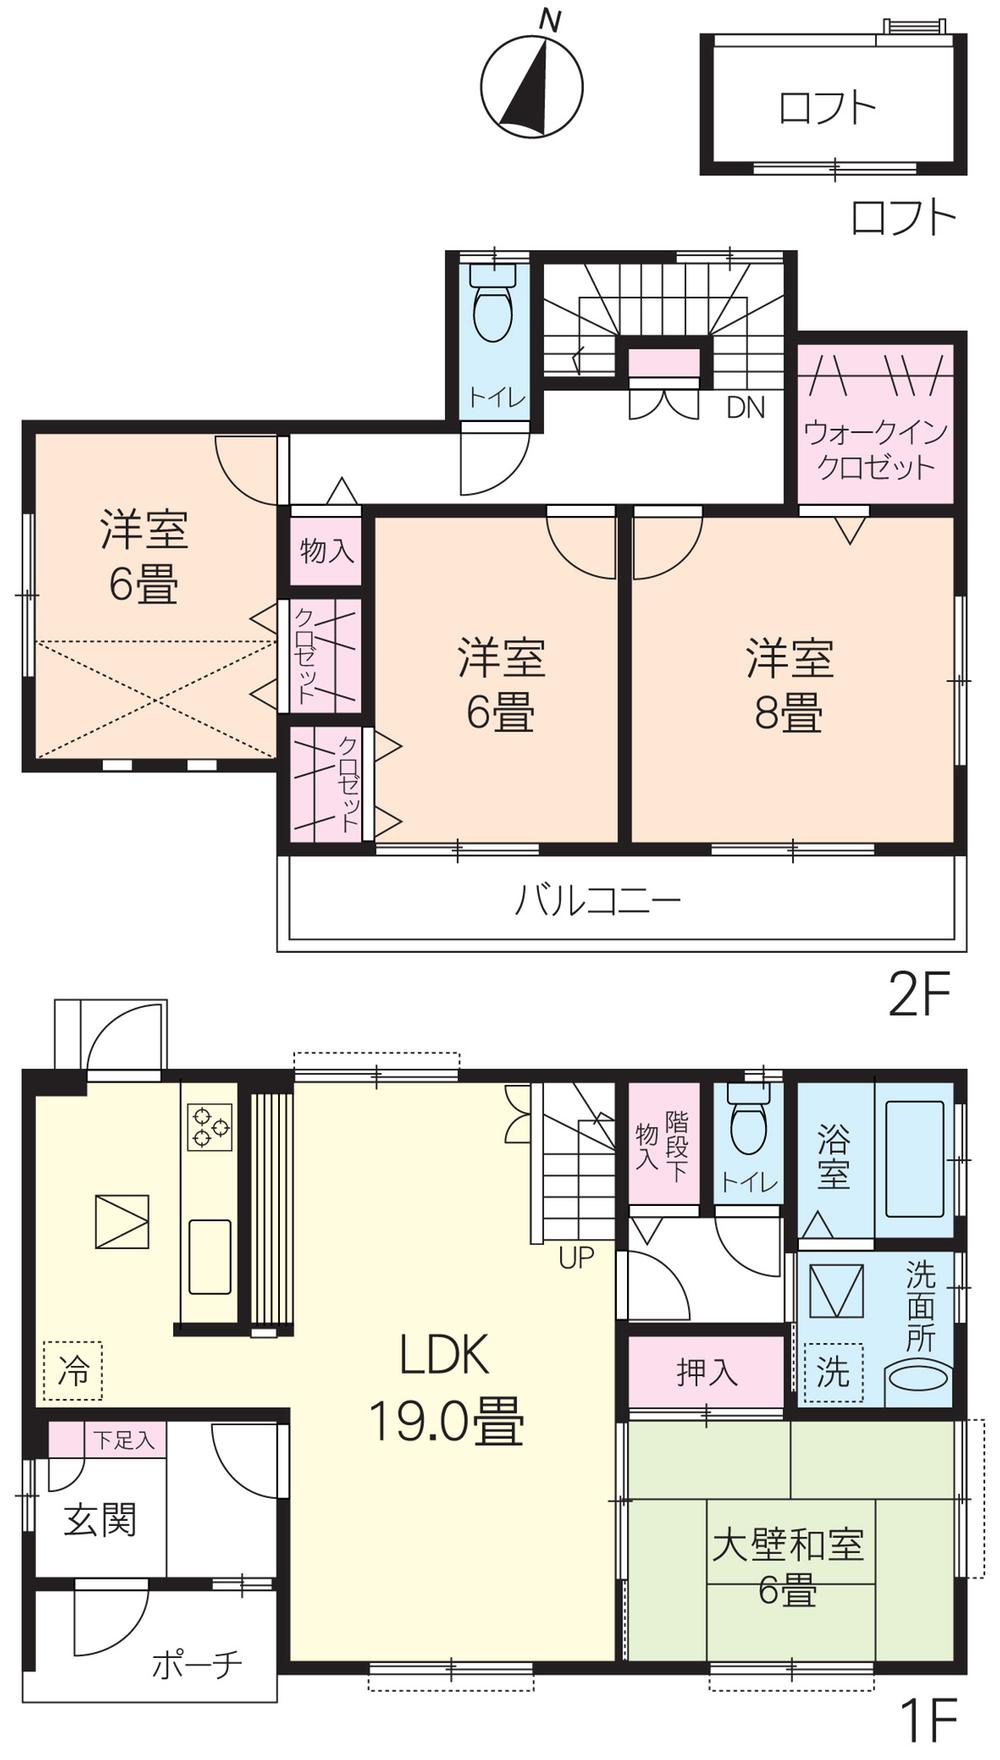 Floor plan. 38,800,000 yen, 4LDK, Land area 210.5 sq m , Building area 112.61 sq m